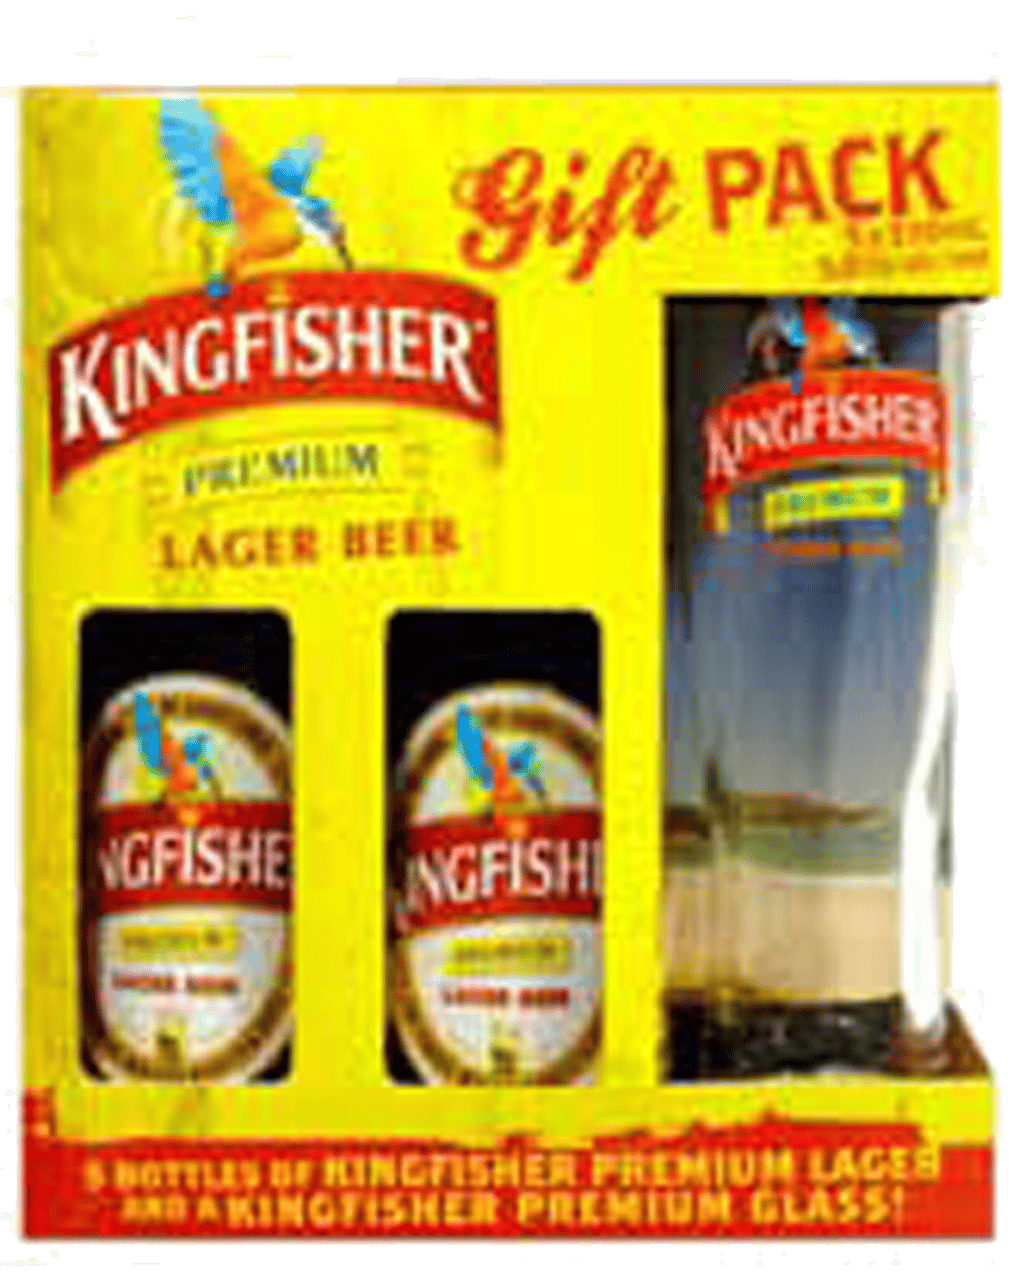 Kingfisher Premium Lager India